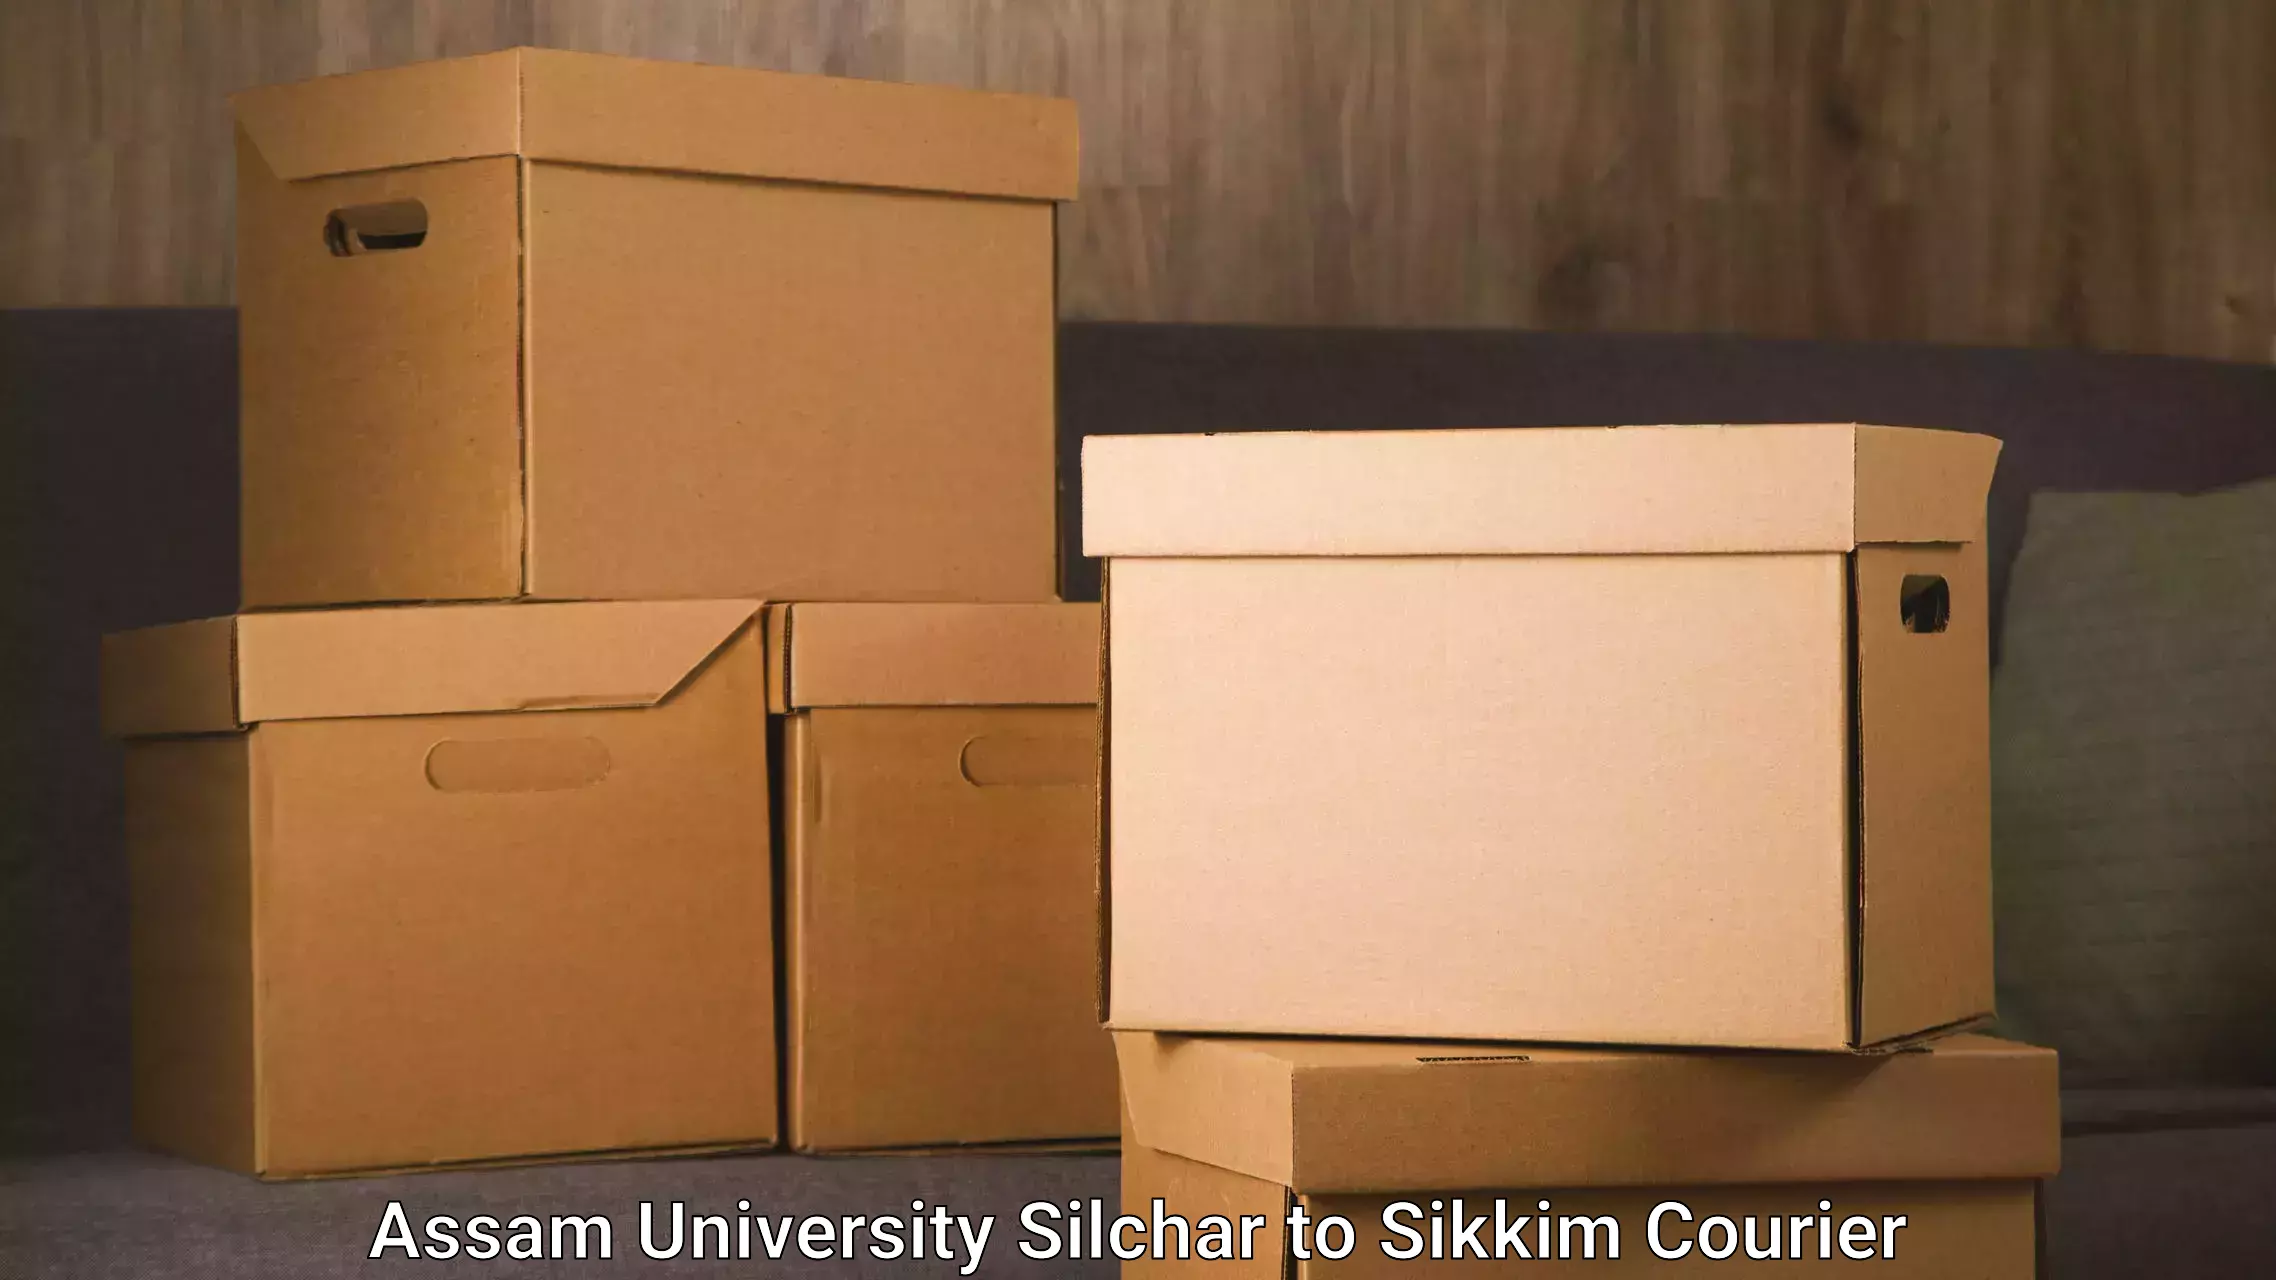 High-speed parcel service Assam University Silchar to Rangpo